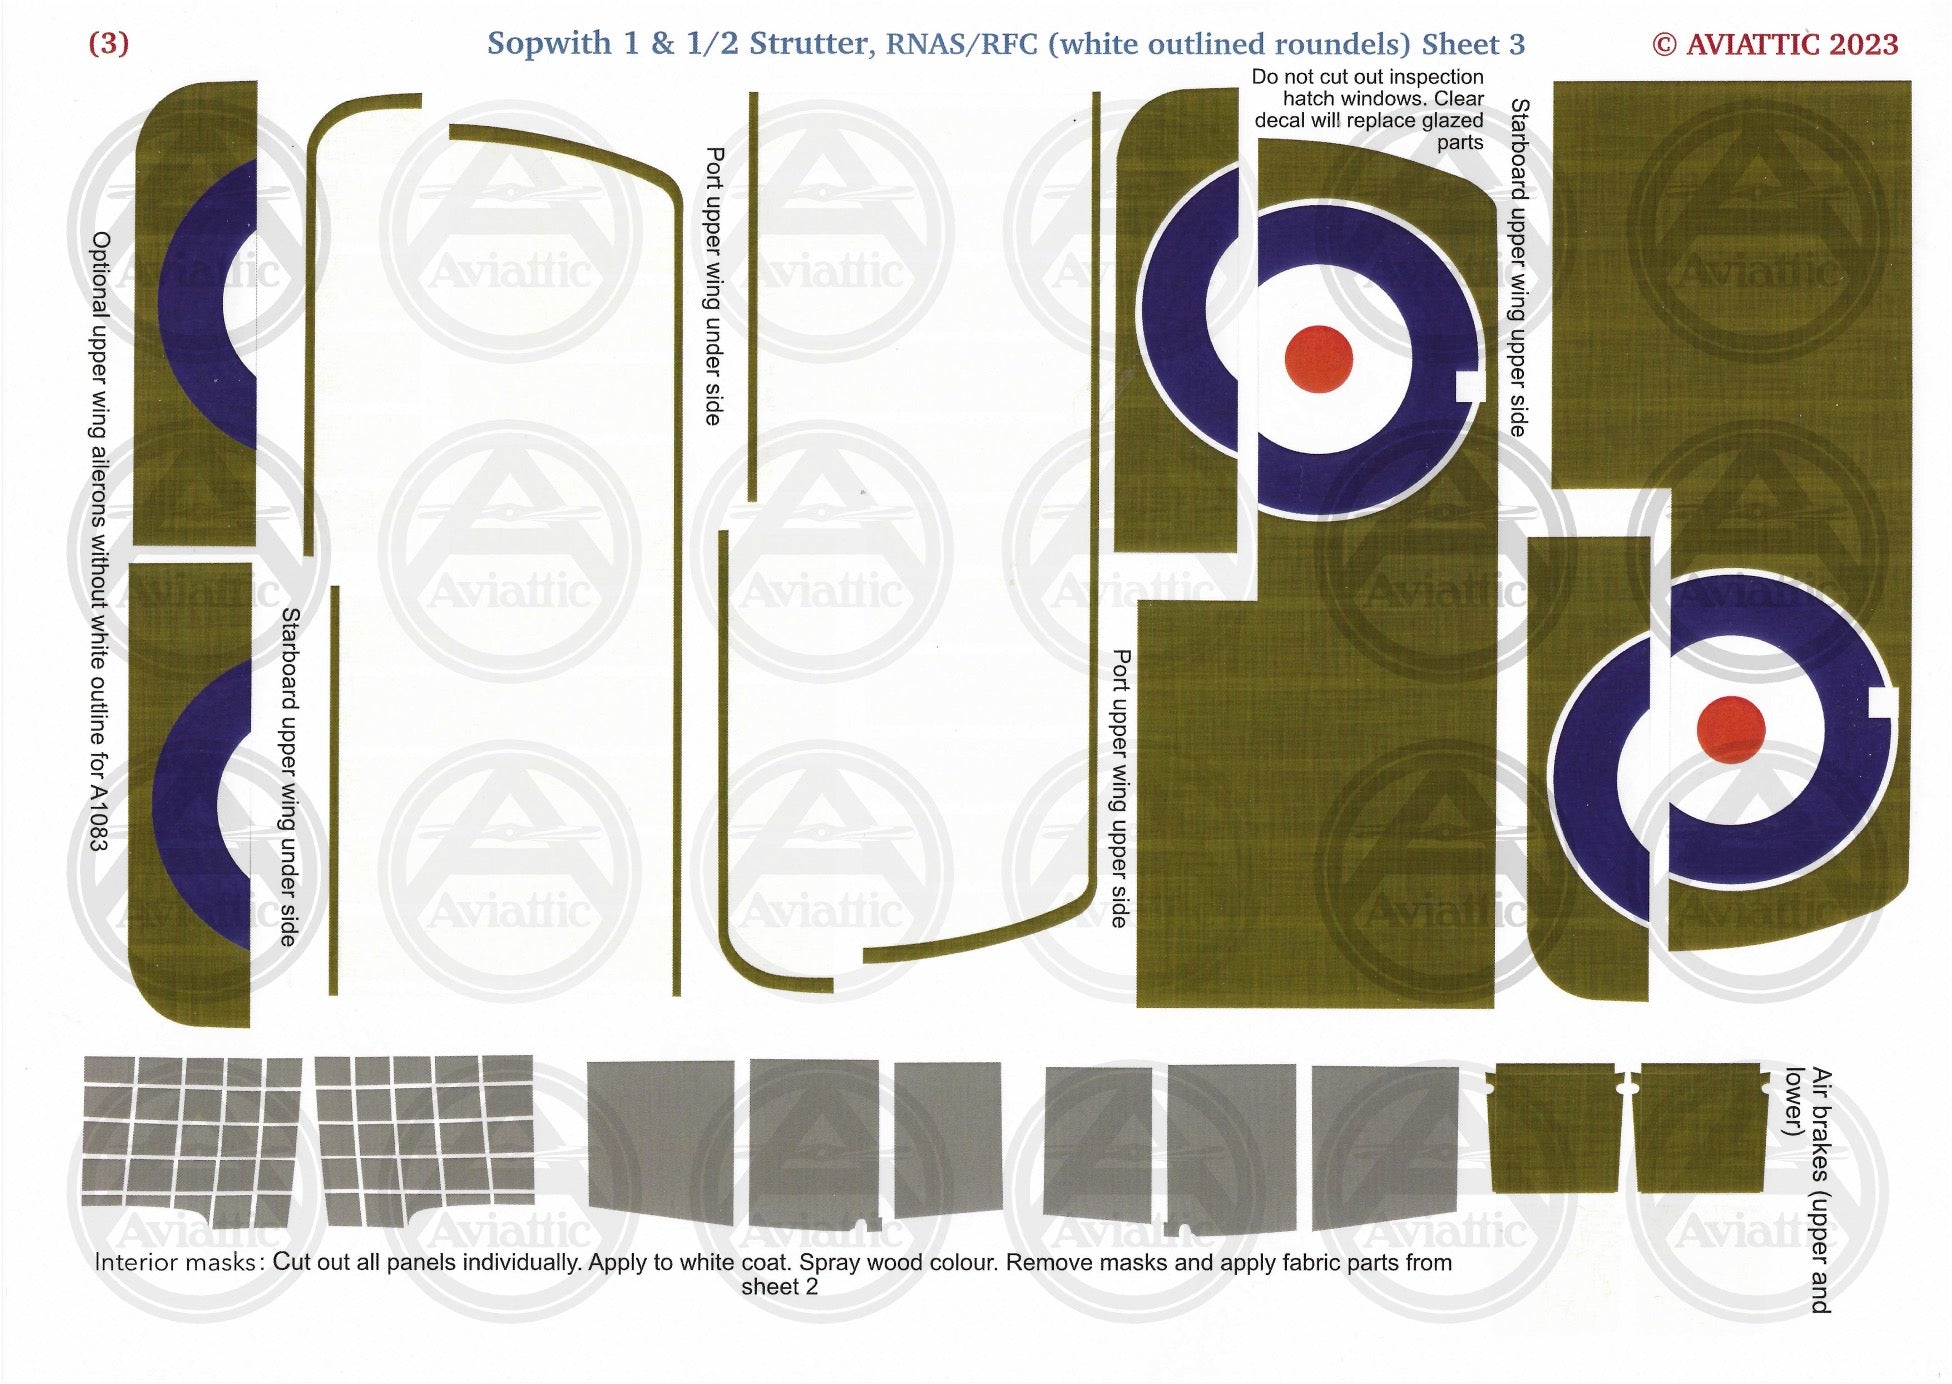 1/32 - Kit Bundle 2.0 - Roden - Sopwith 1 & 1/2 Strutter - 9722 - Flt Cdr. C. Draper, Sub Lt. A.T. Barker - N° 3 Wing, RNAS